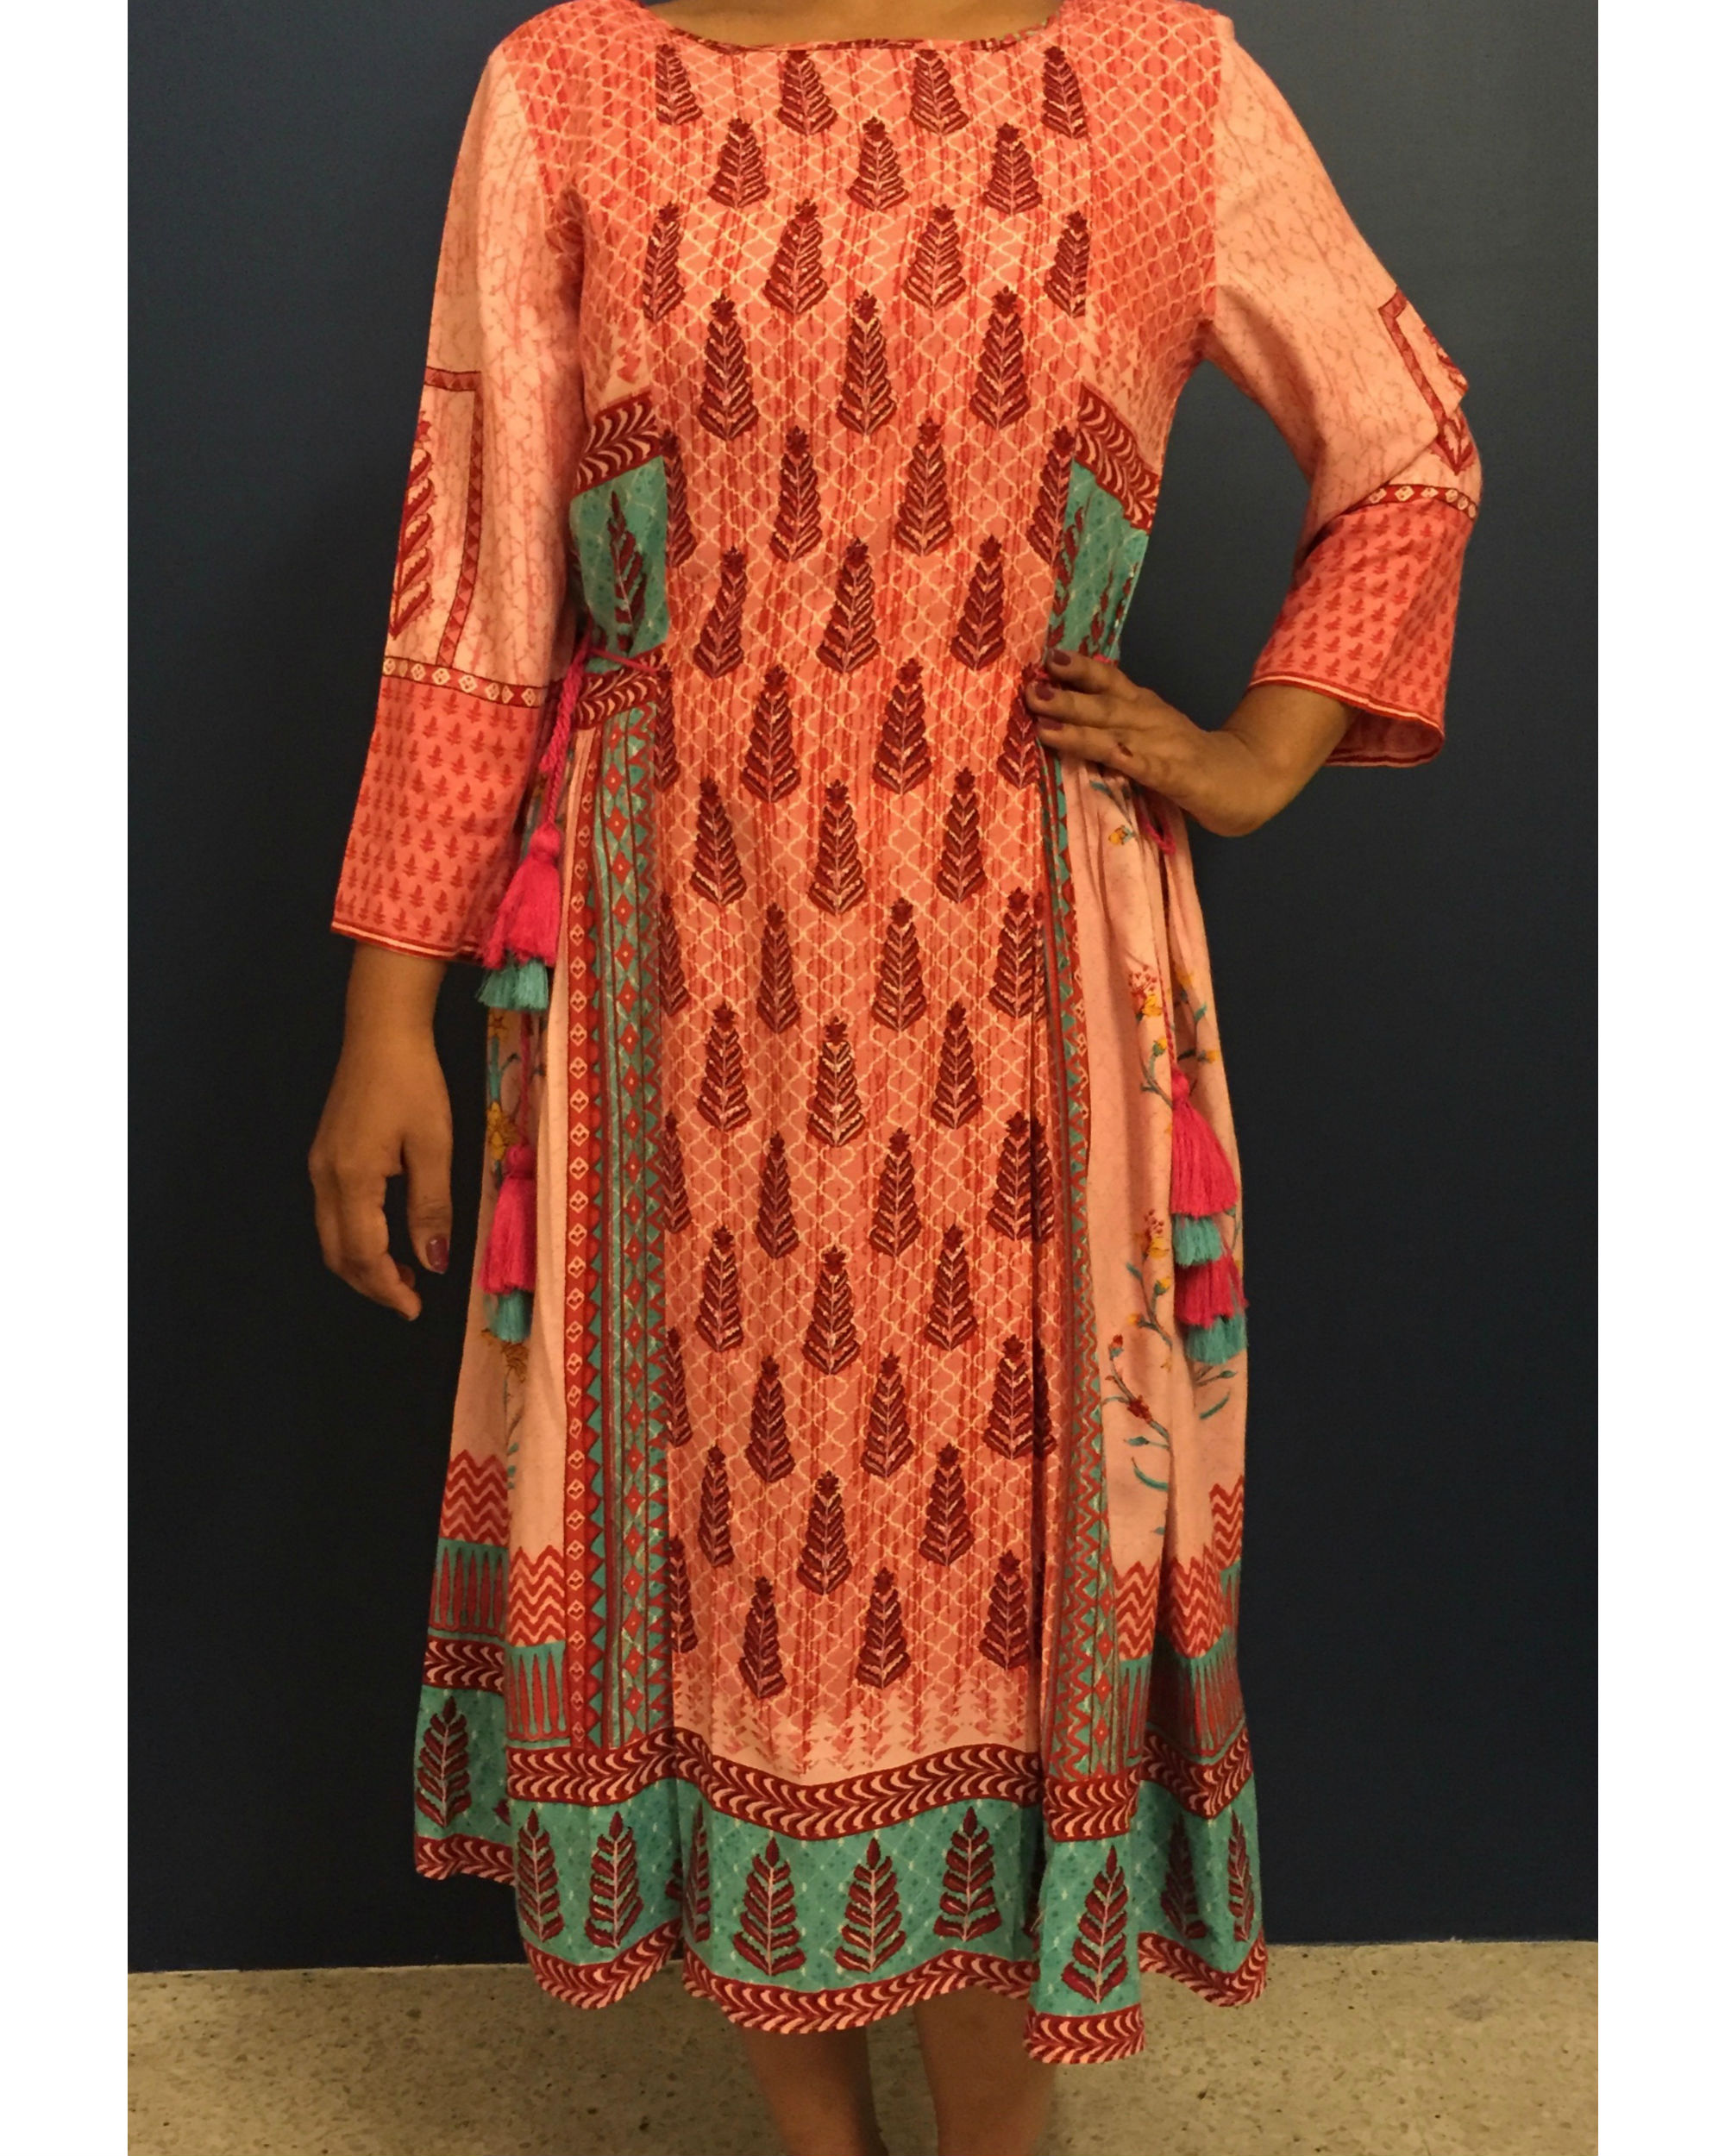 Coral banjara dress by Kapraaha | The Secret Label